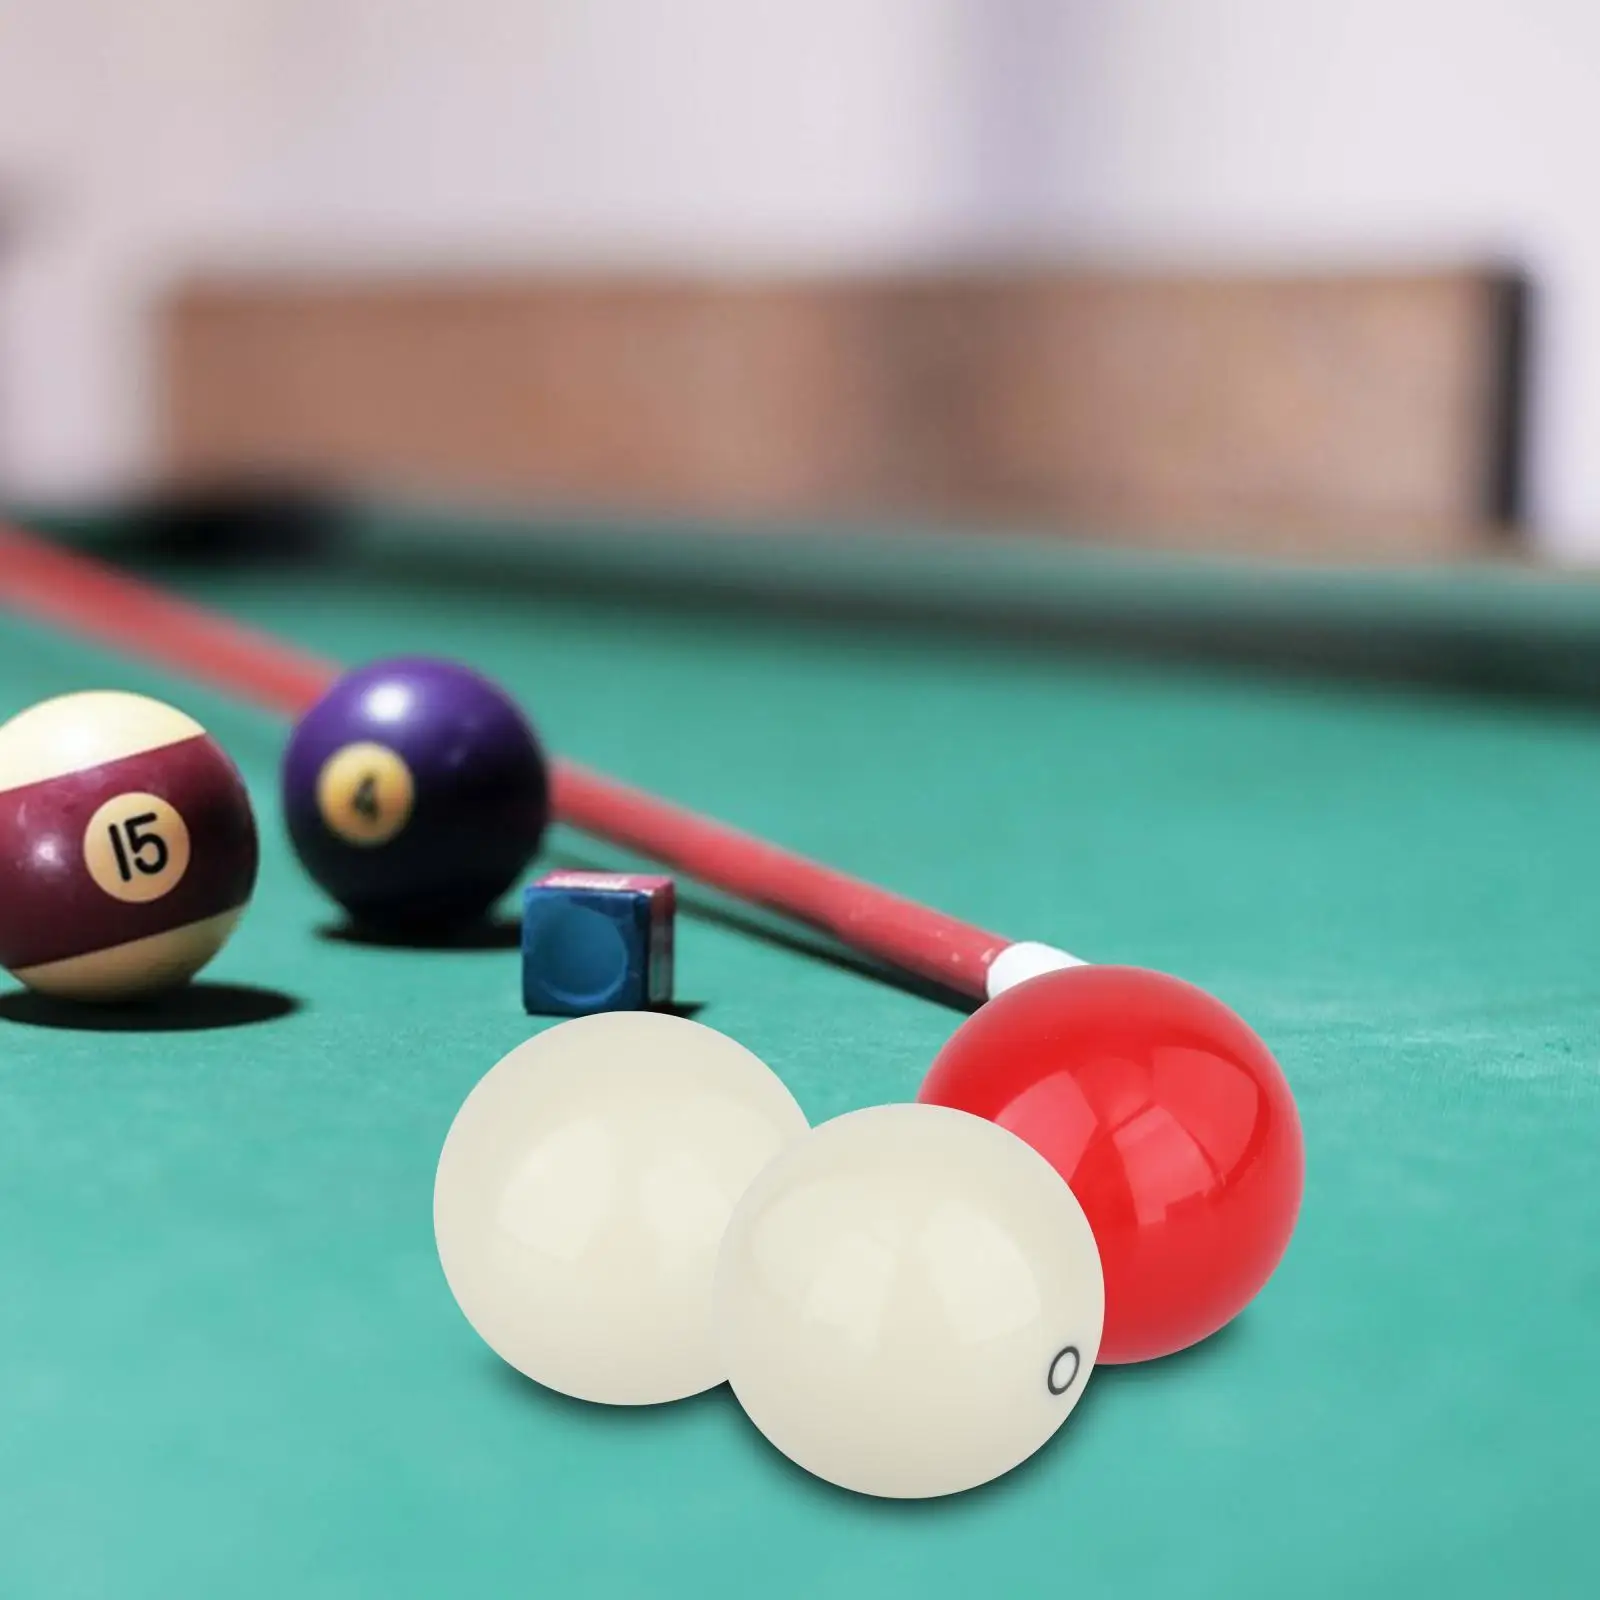 3x Complete Ball Set Improve Skills Training Billiard Pool Balls for Women